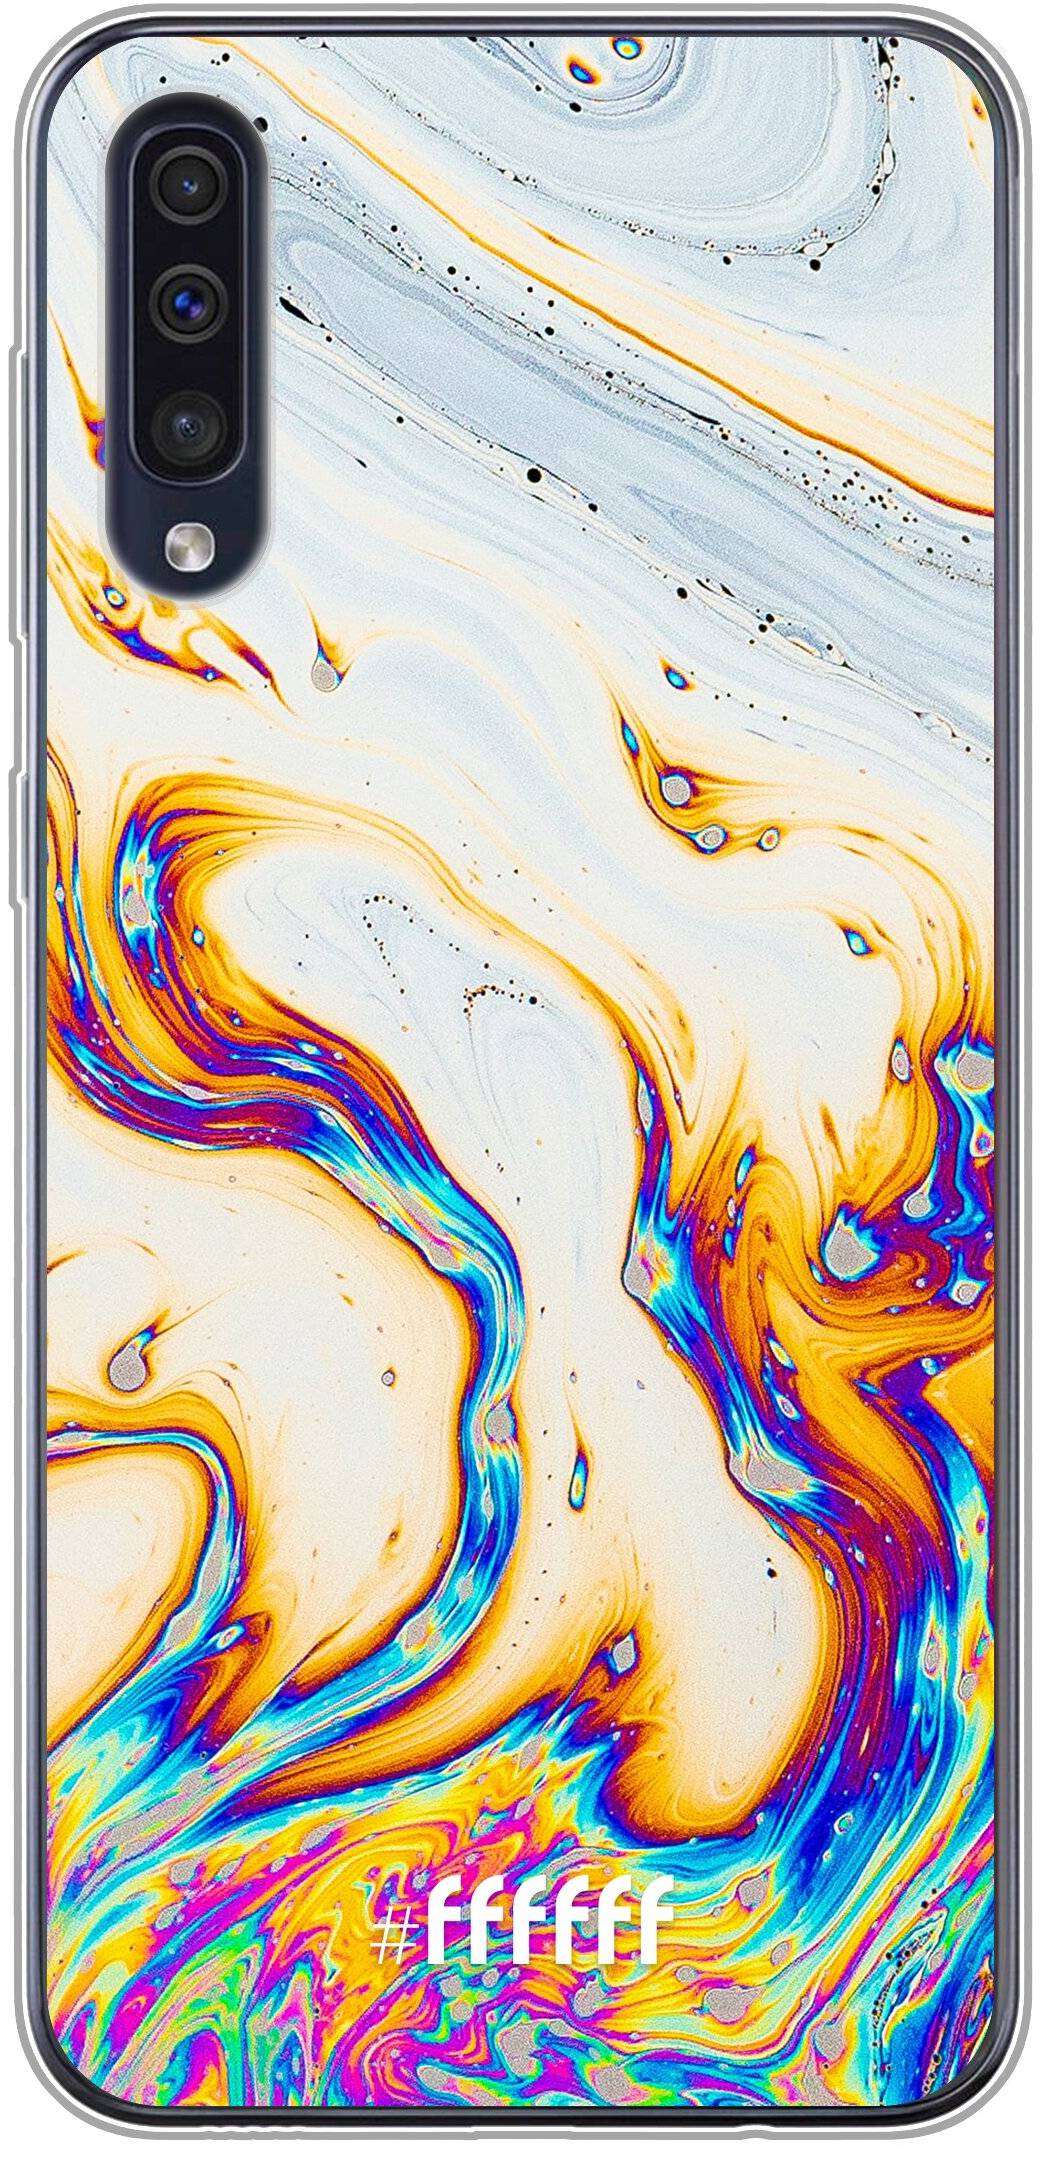 Bubble Texture Galaxy A50s